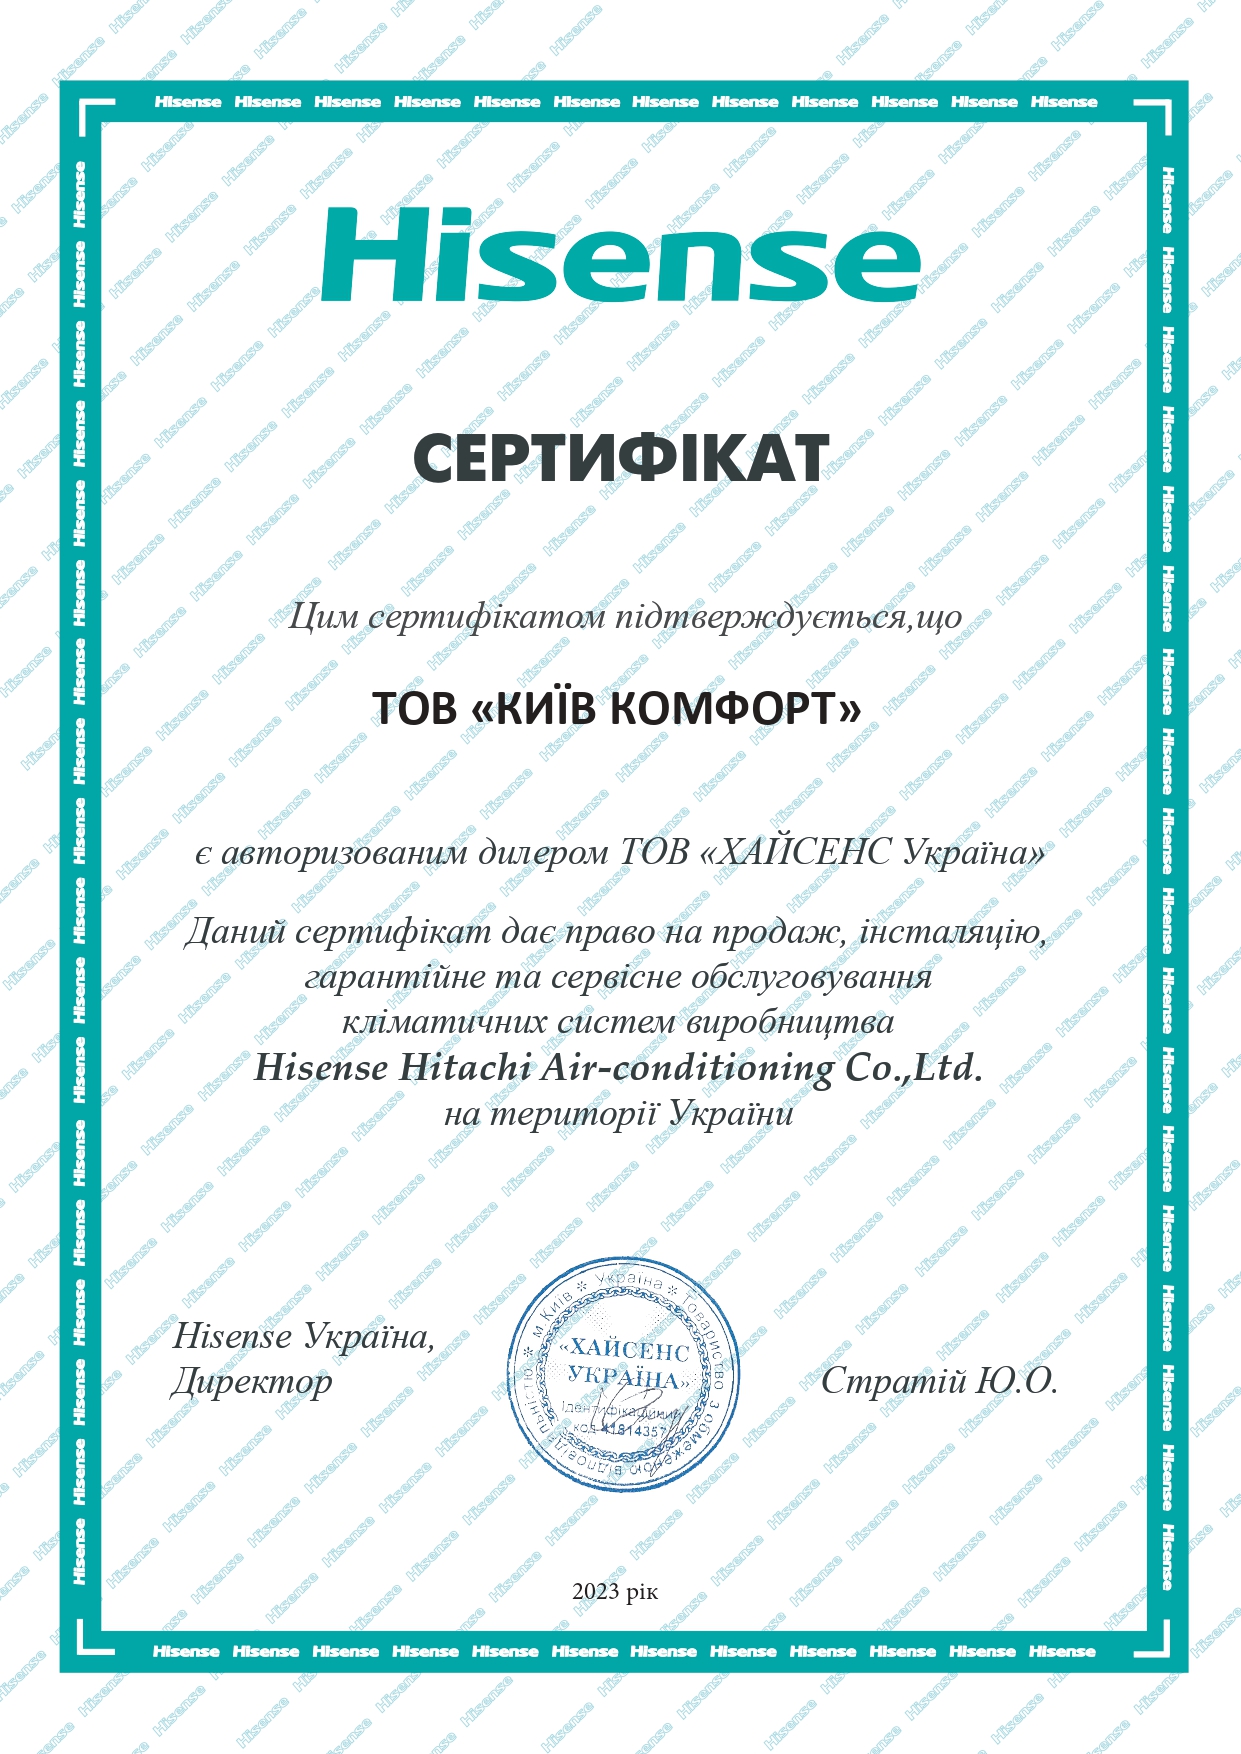 Сертификат Hisense 2023